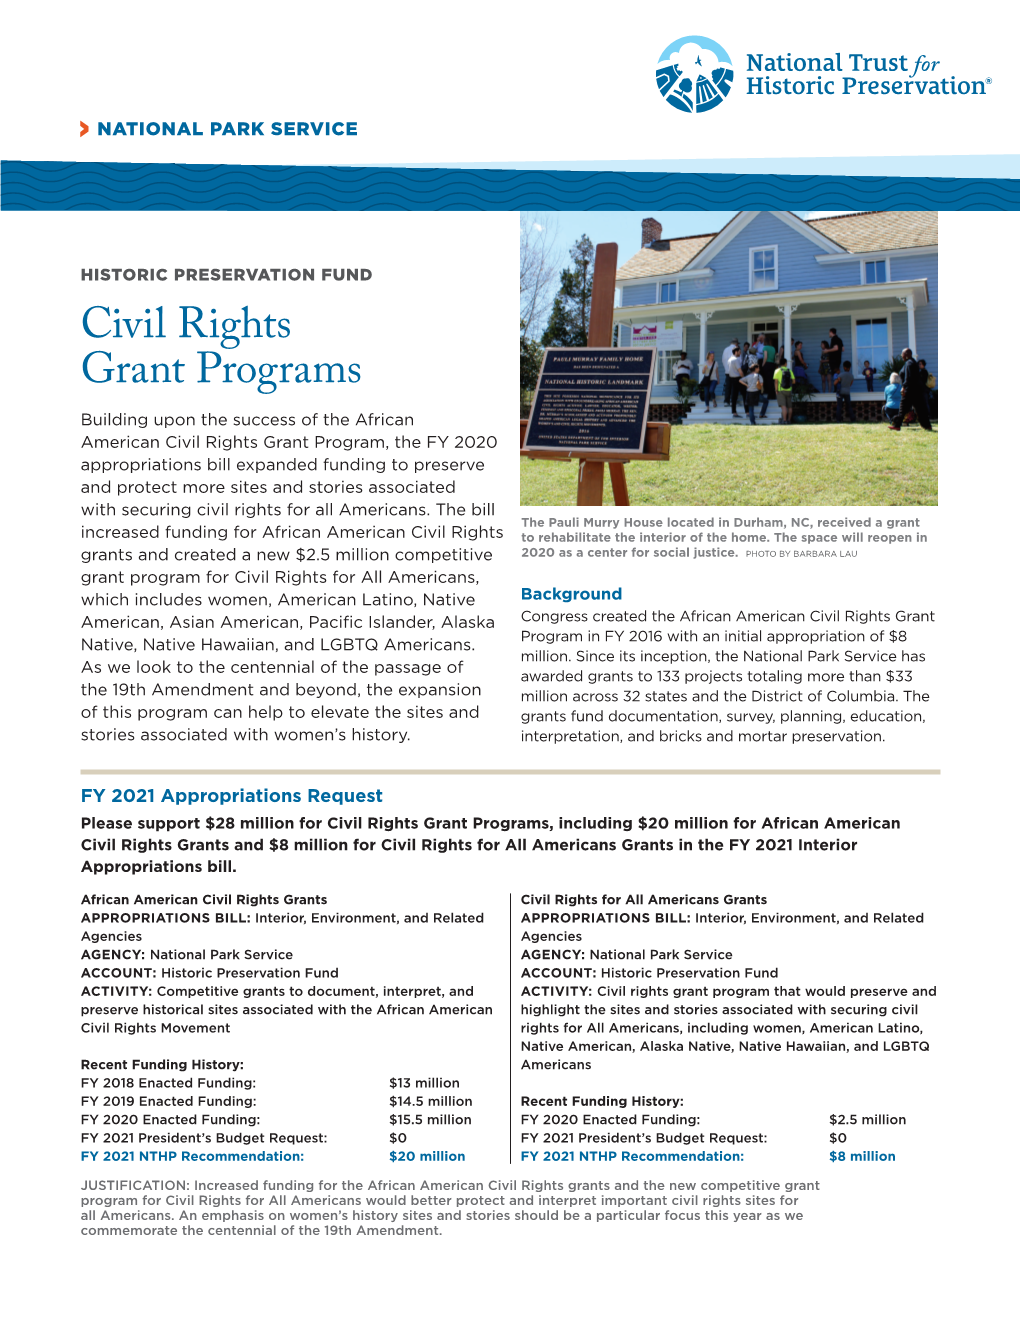 Civil Rights Grant Programs